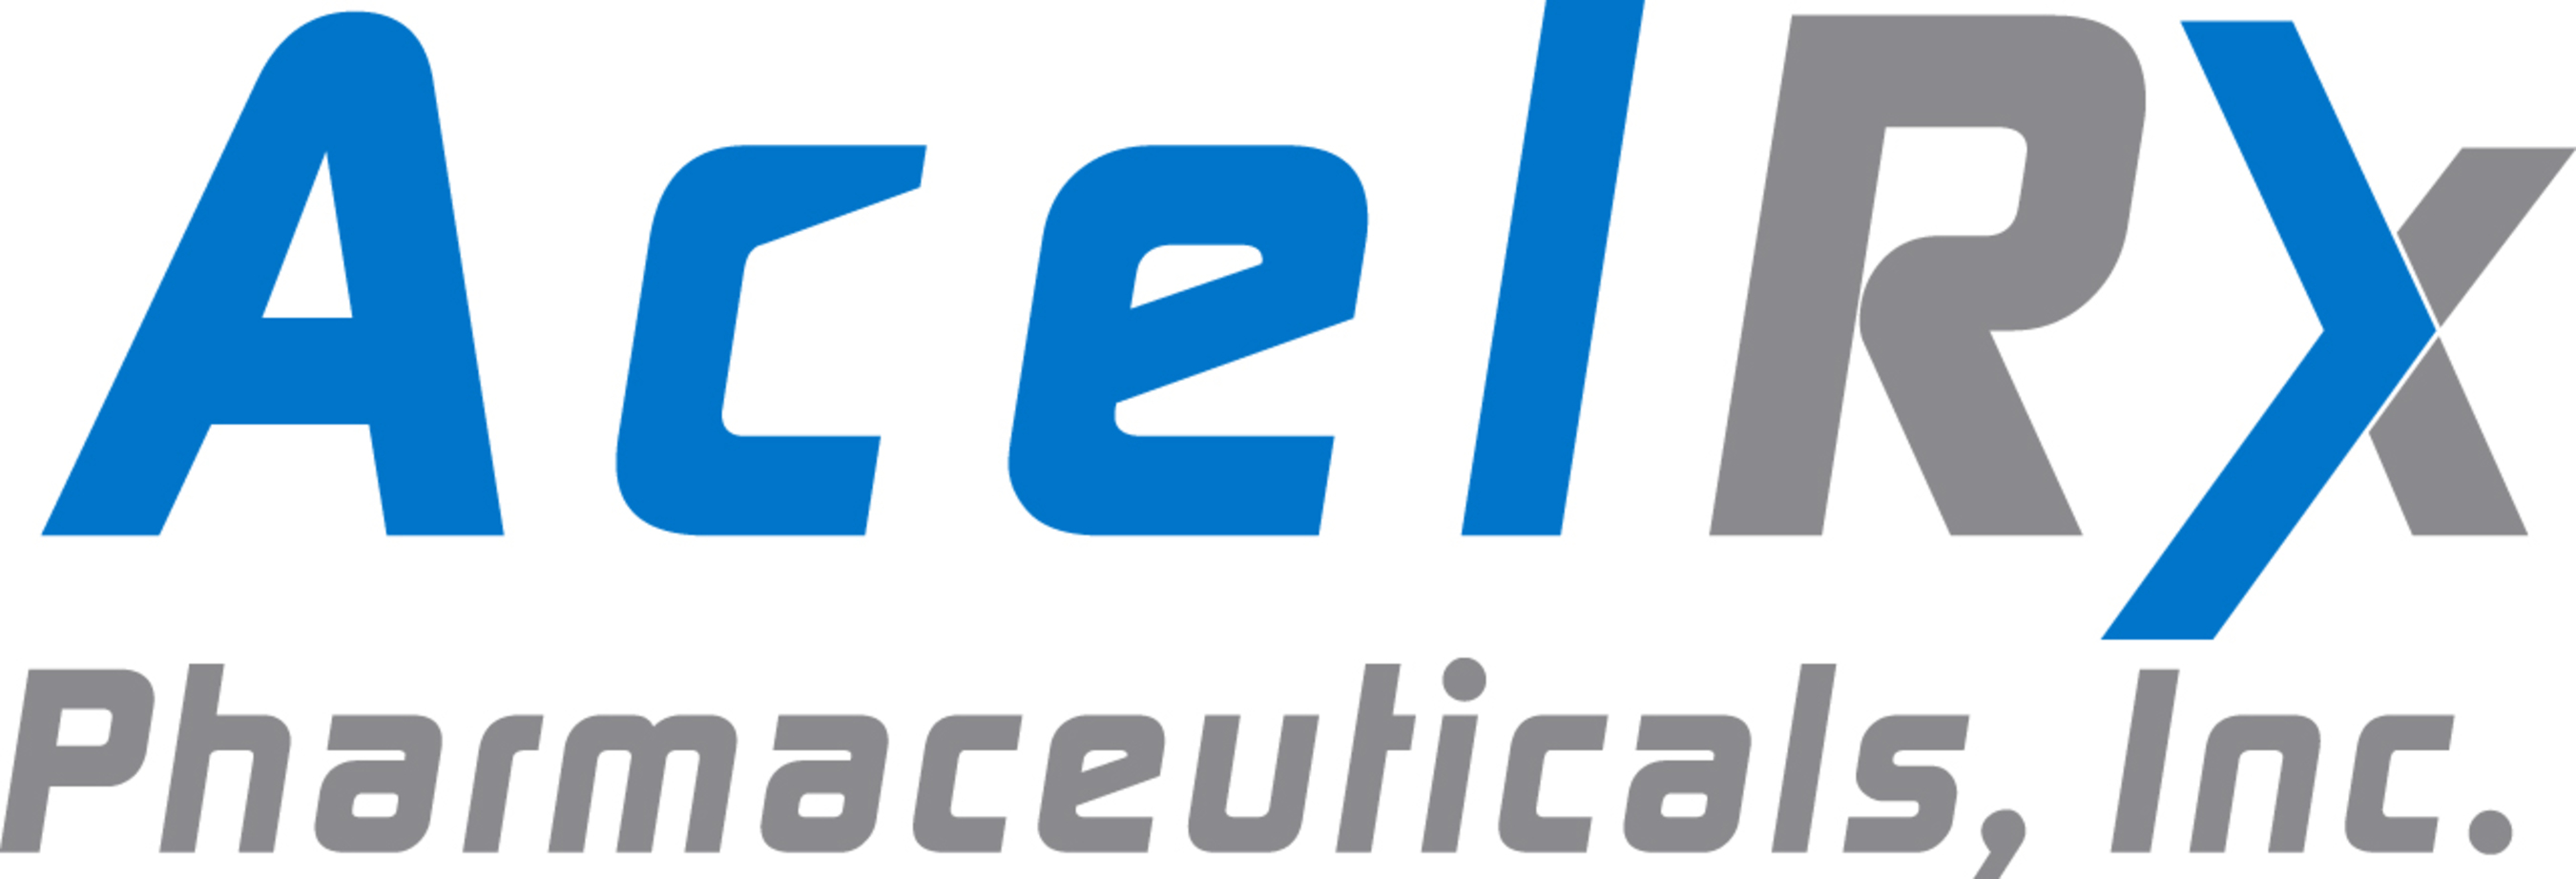 AcelRx logo.